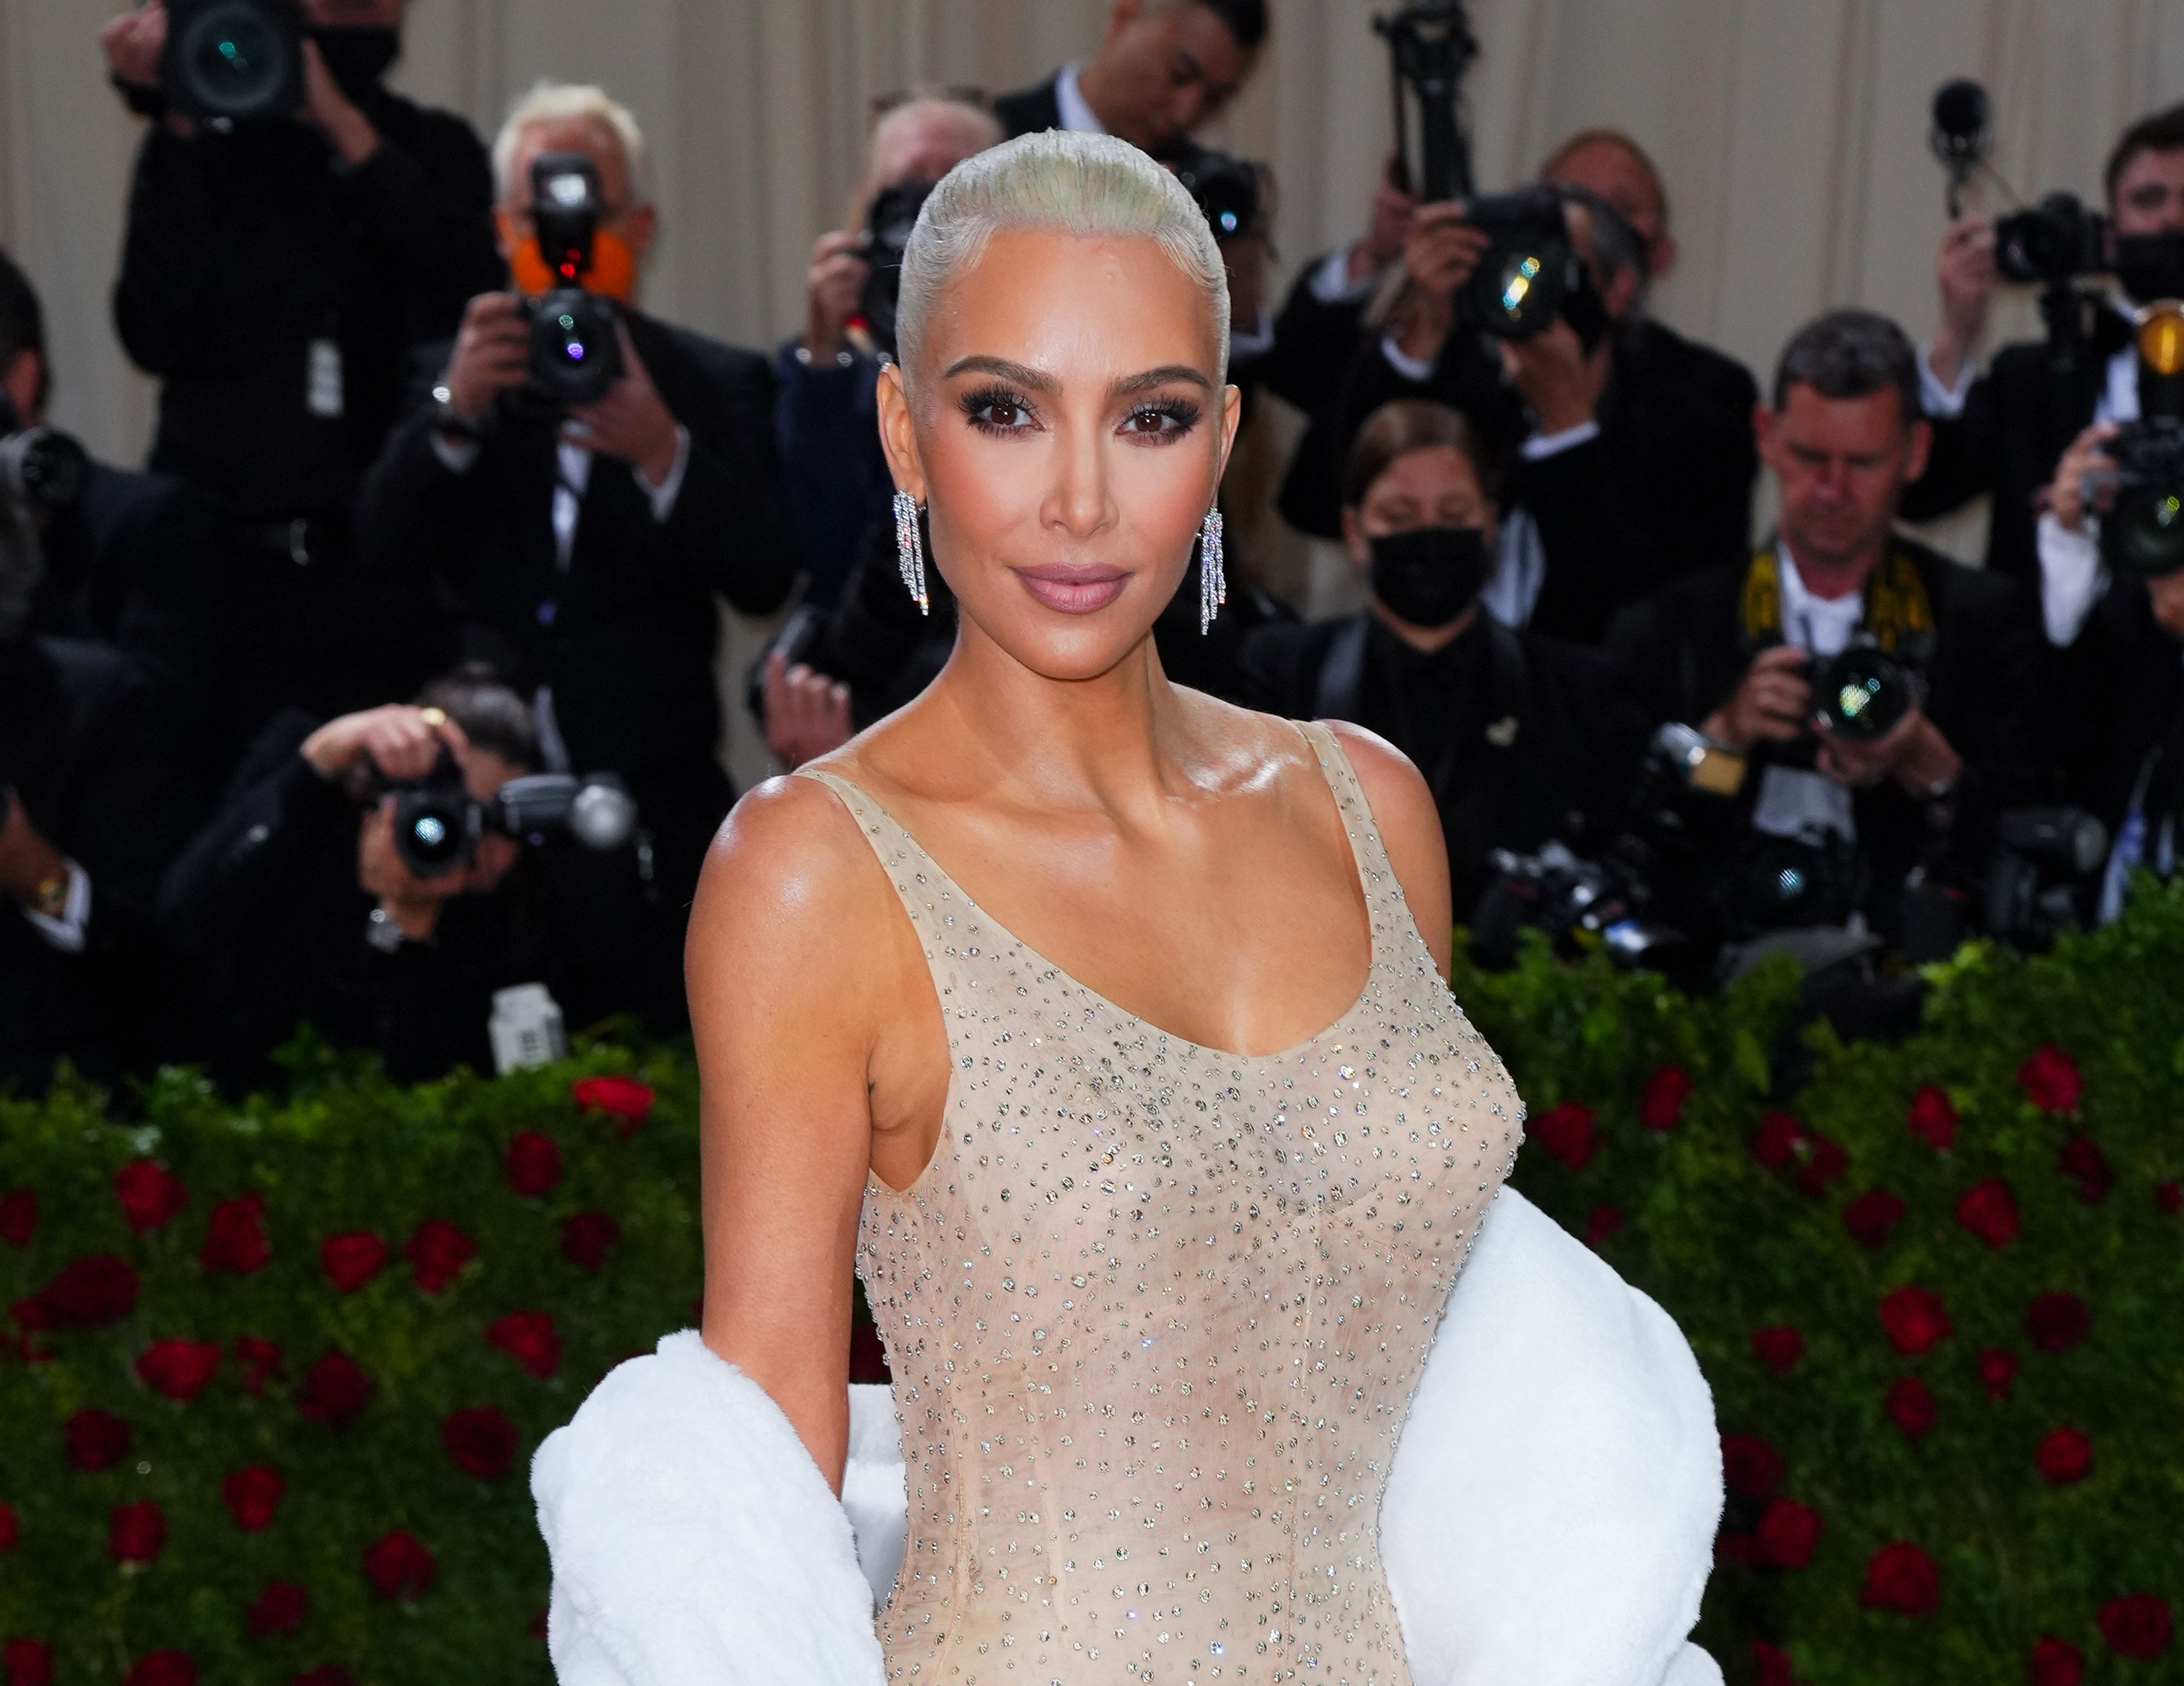 aburrido protesta Masculinidad Met Gala 2022: el vestido de Kim Kardashian era de Marilyn Monroe